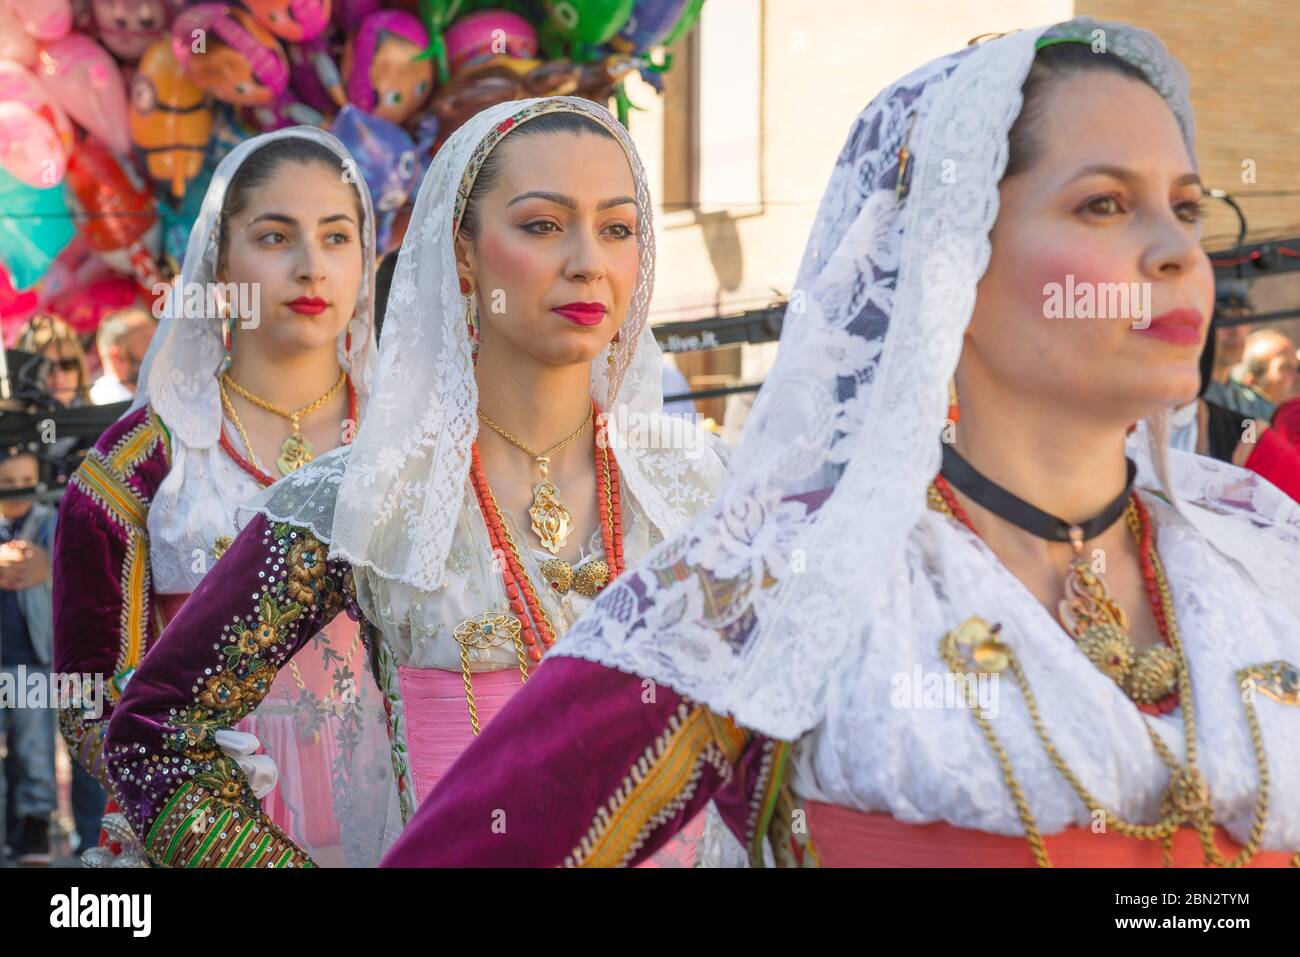 Sardinia festival Cavalcata, view of Sardinian women in traditional costume participating in the Cavalcata grand procession through Sassari, Sardinia. Stock Photo